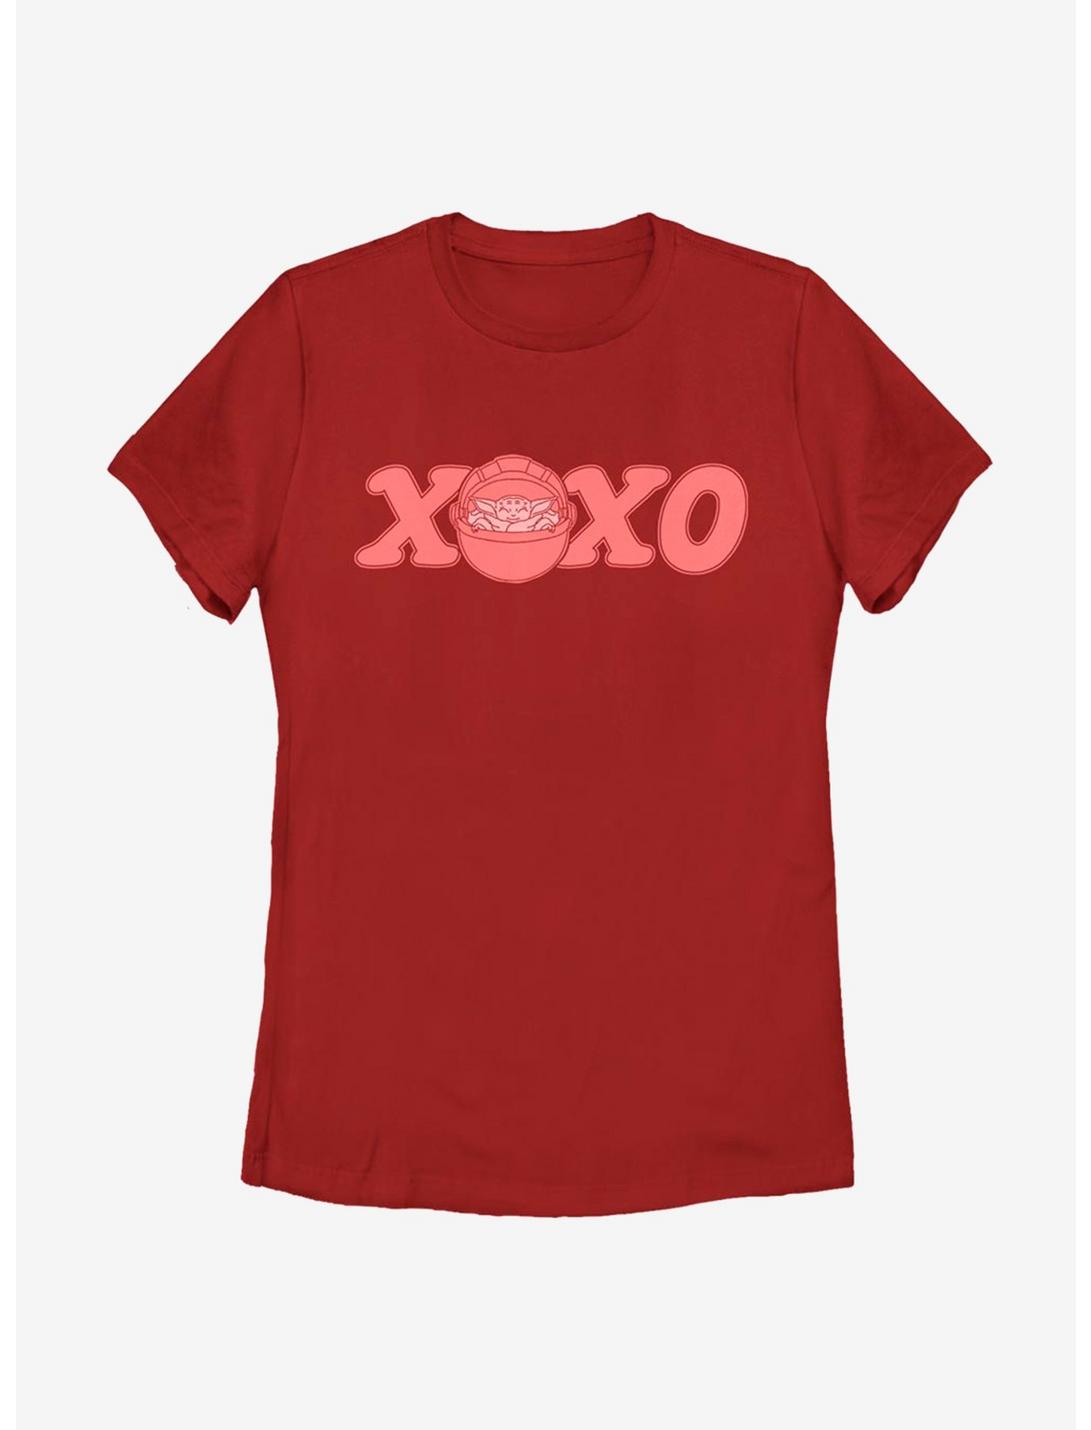 Star Wars The Mandalorian XOXO The Child Womens T-Shirt, RED, hi-res